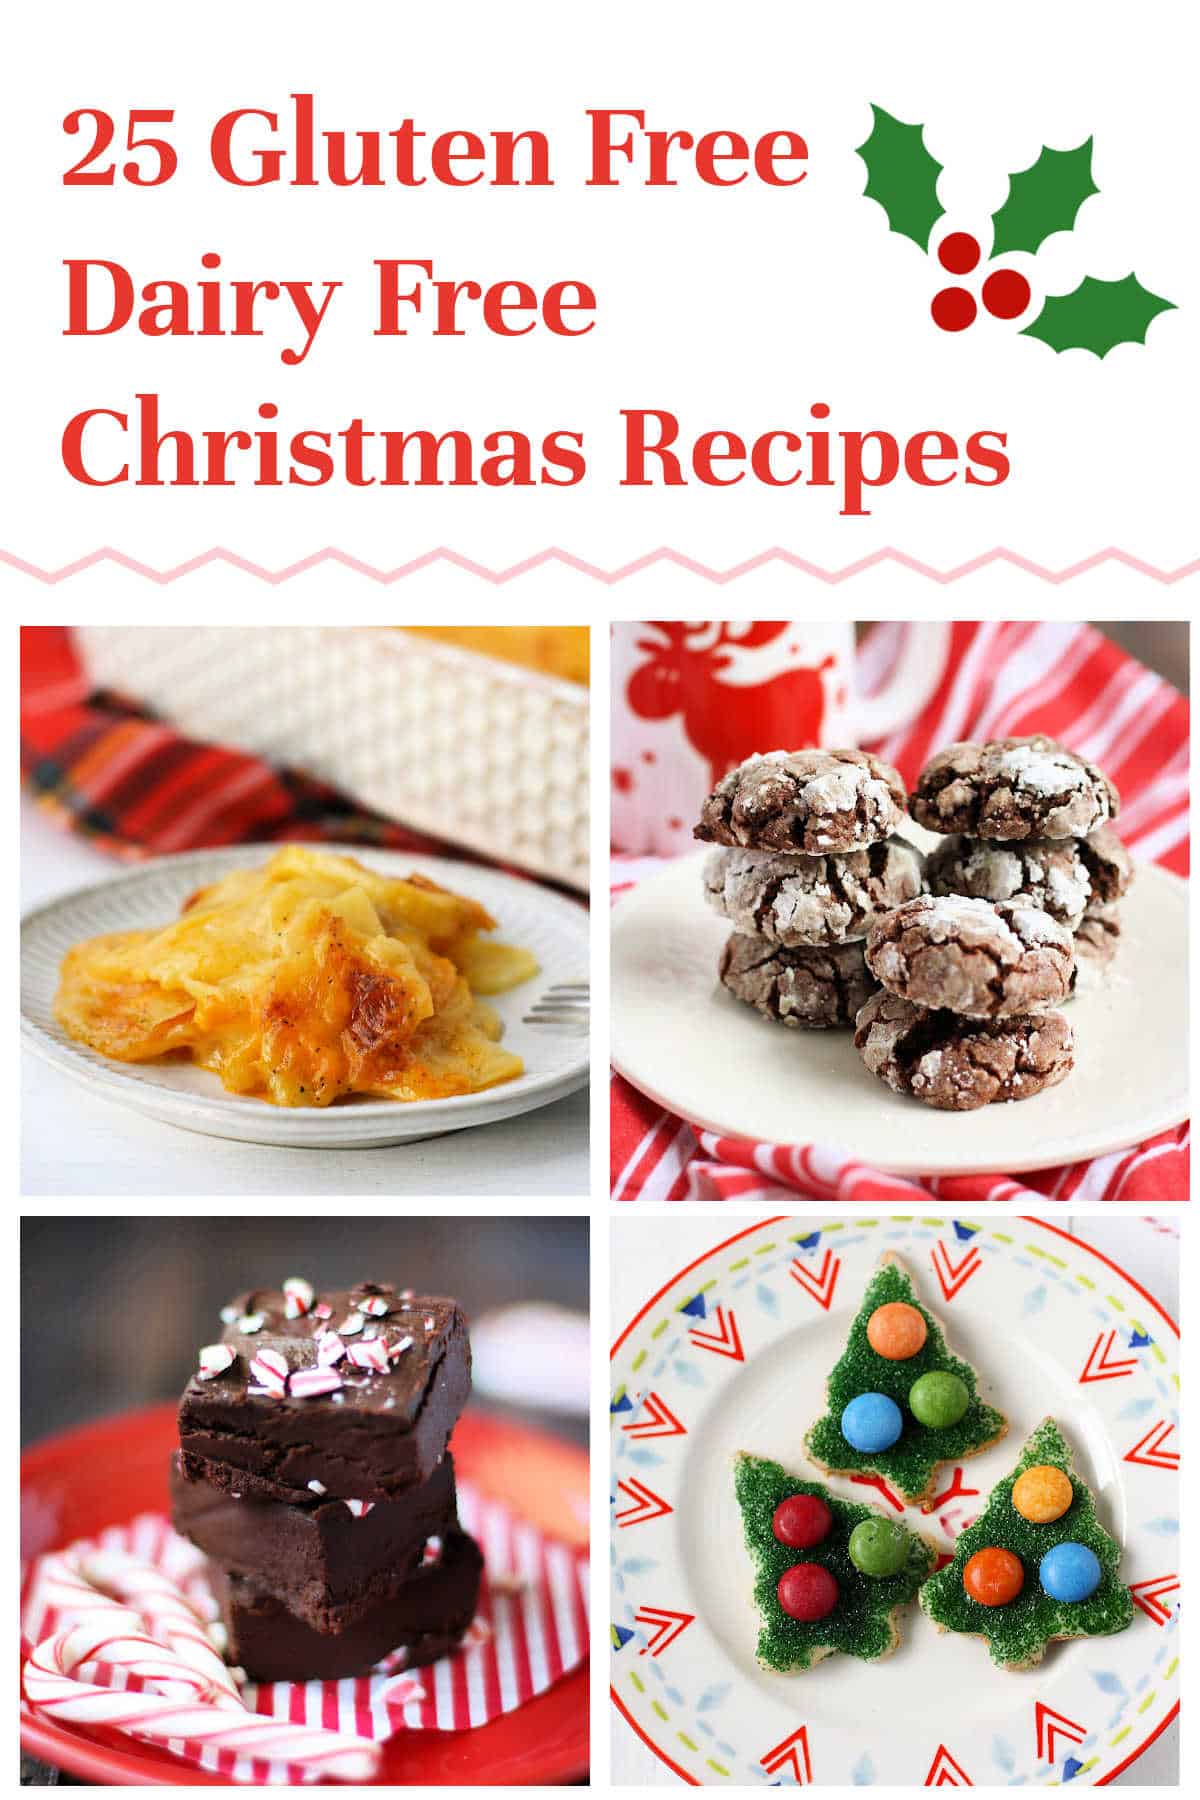 25 gluten free dairy free christmas recipes